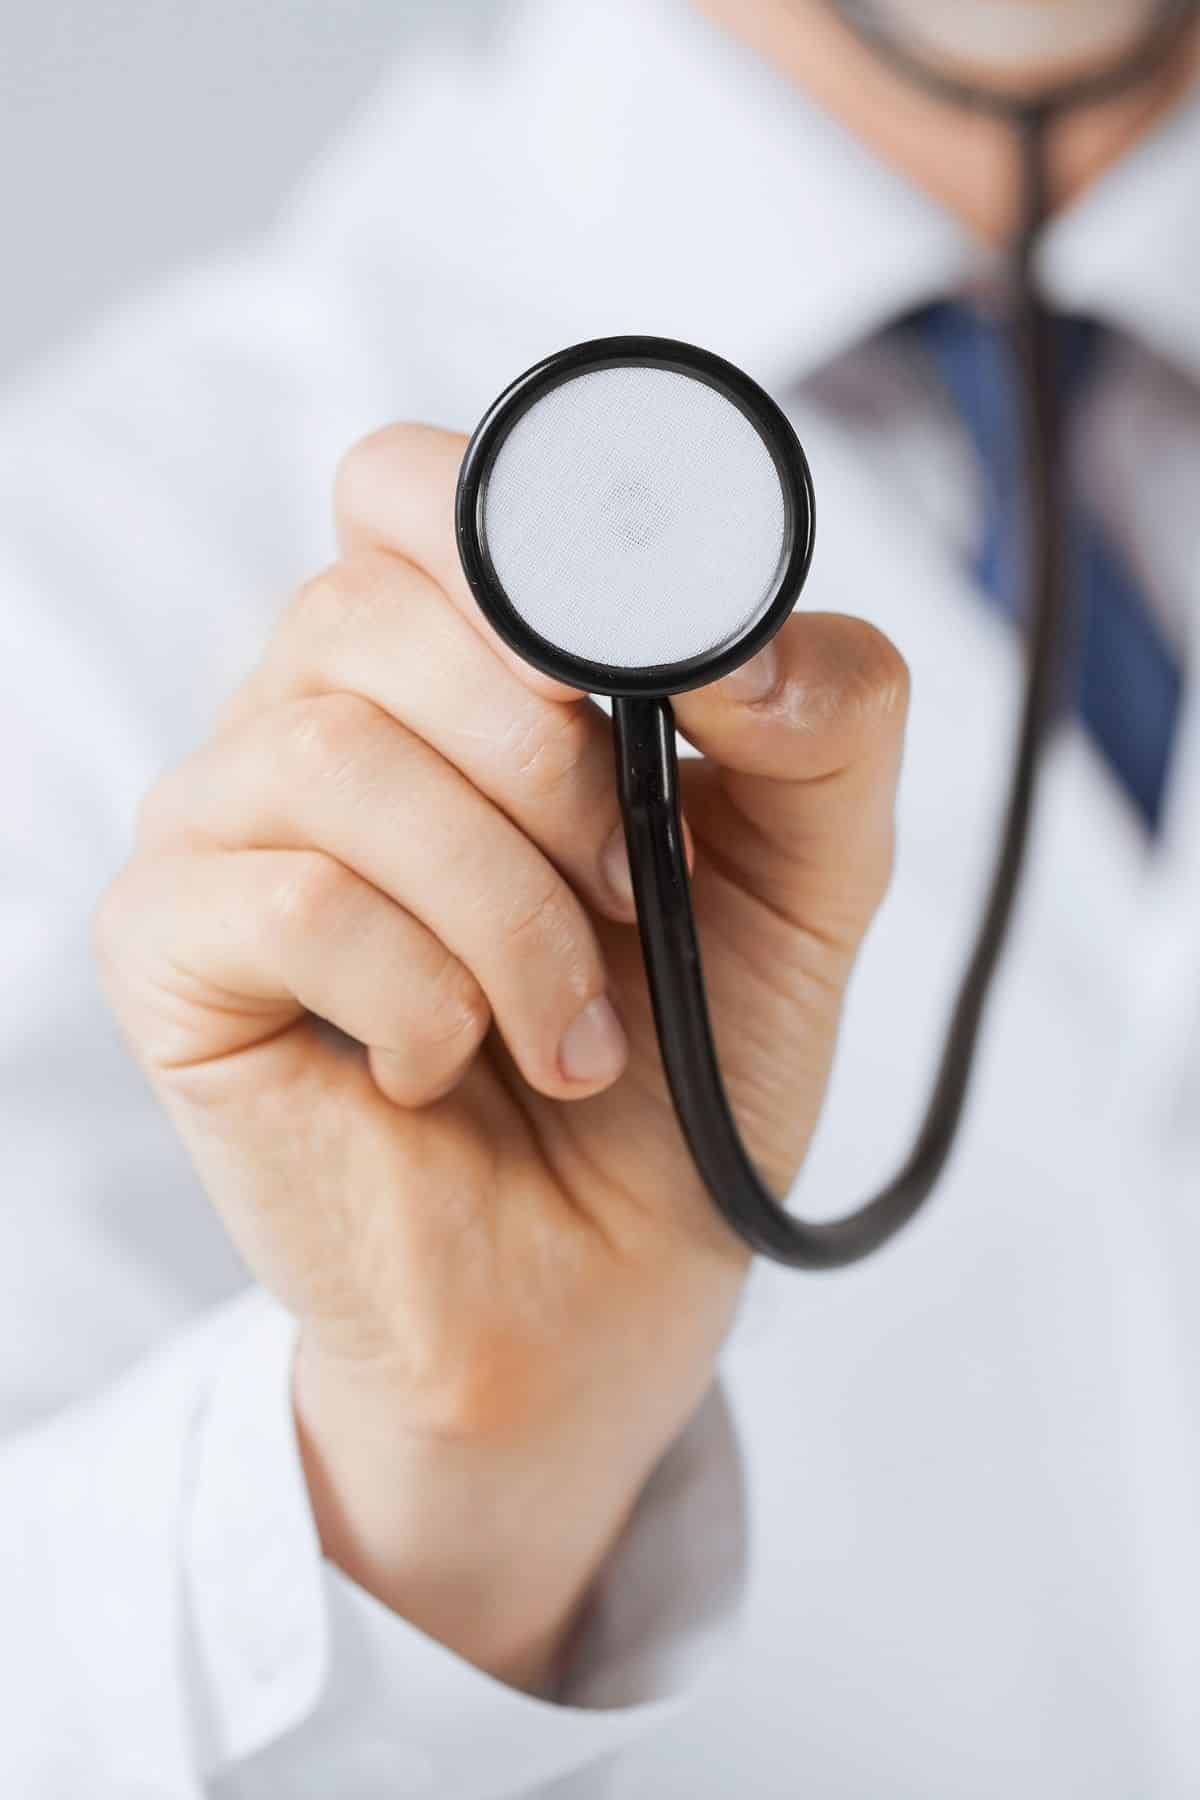 doctor holding stethoscope.